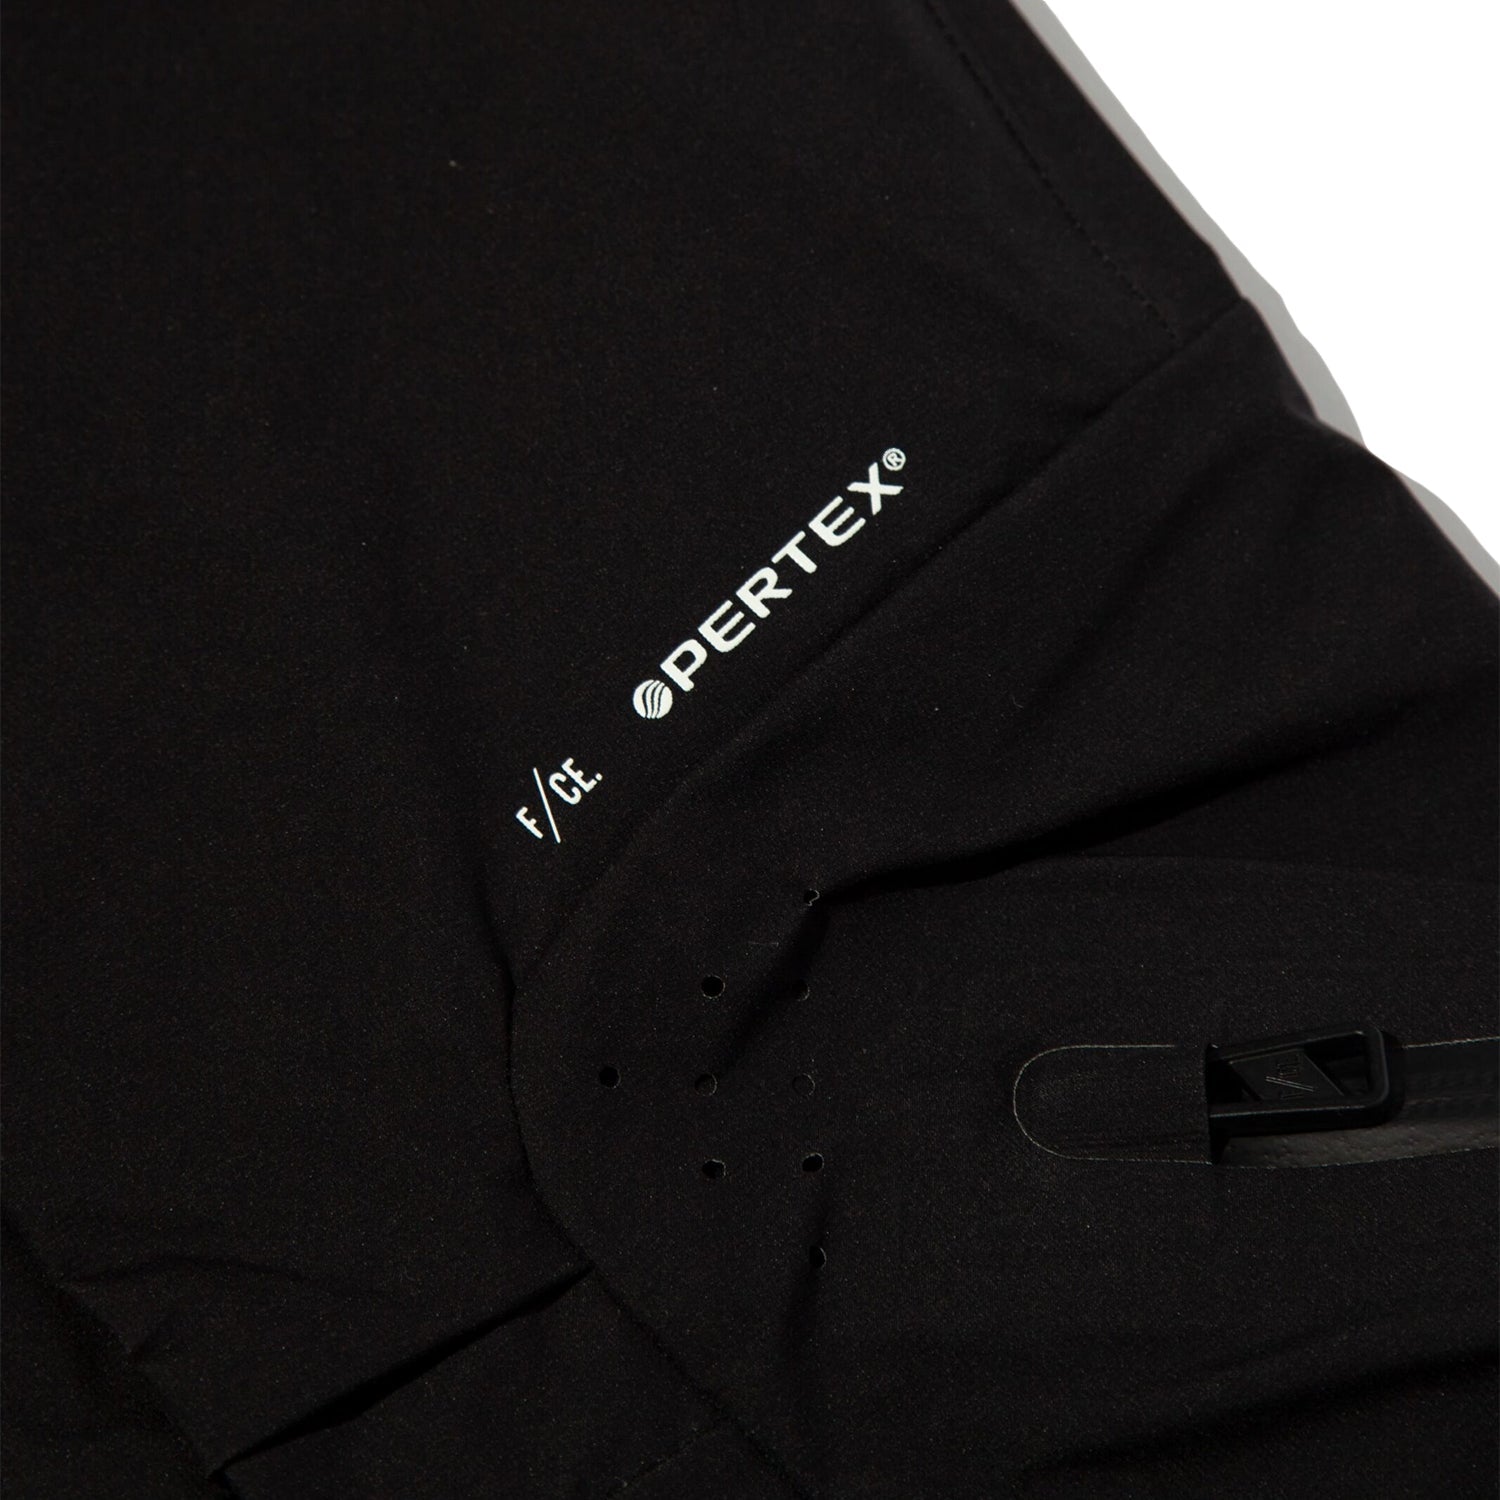 F/CE Men Tech WP Trousers Black - BOTTOMS - Canada